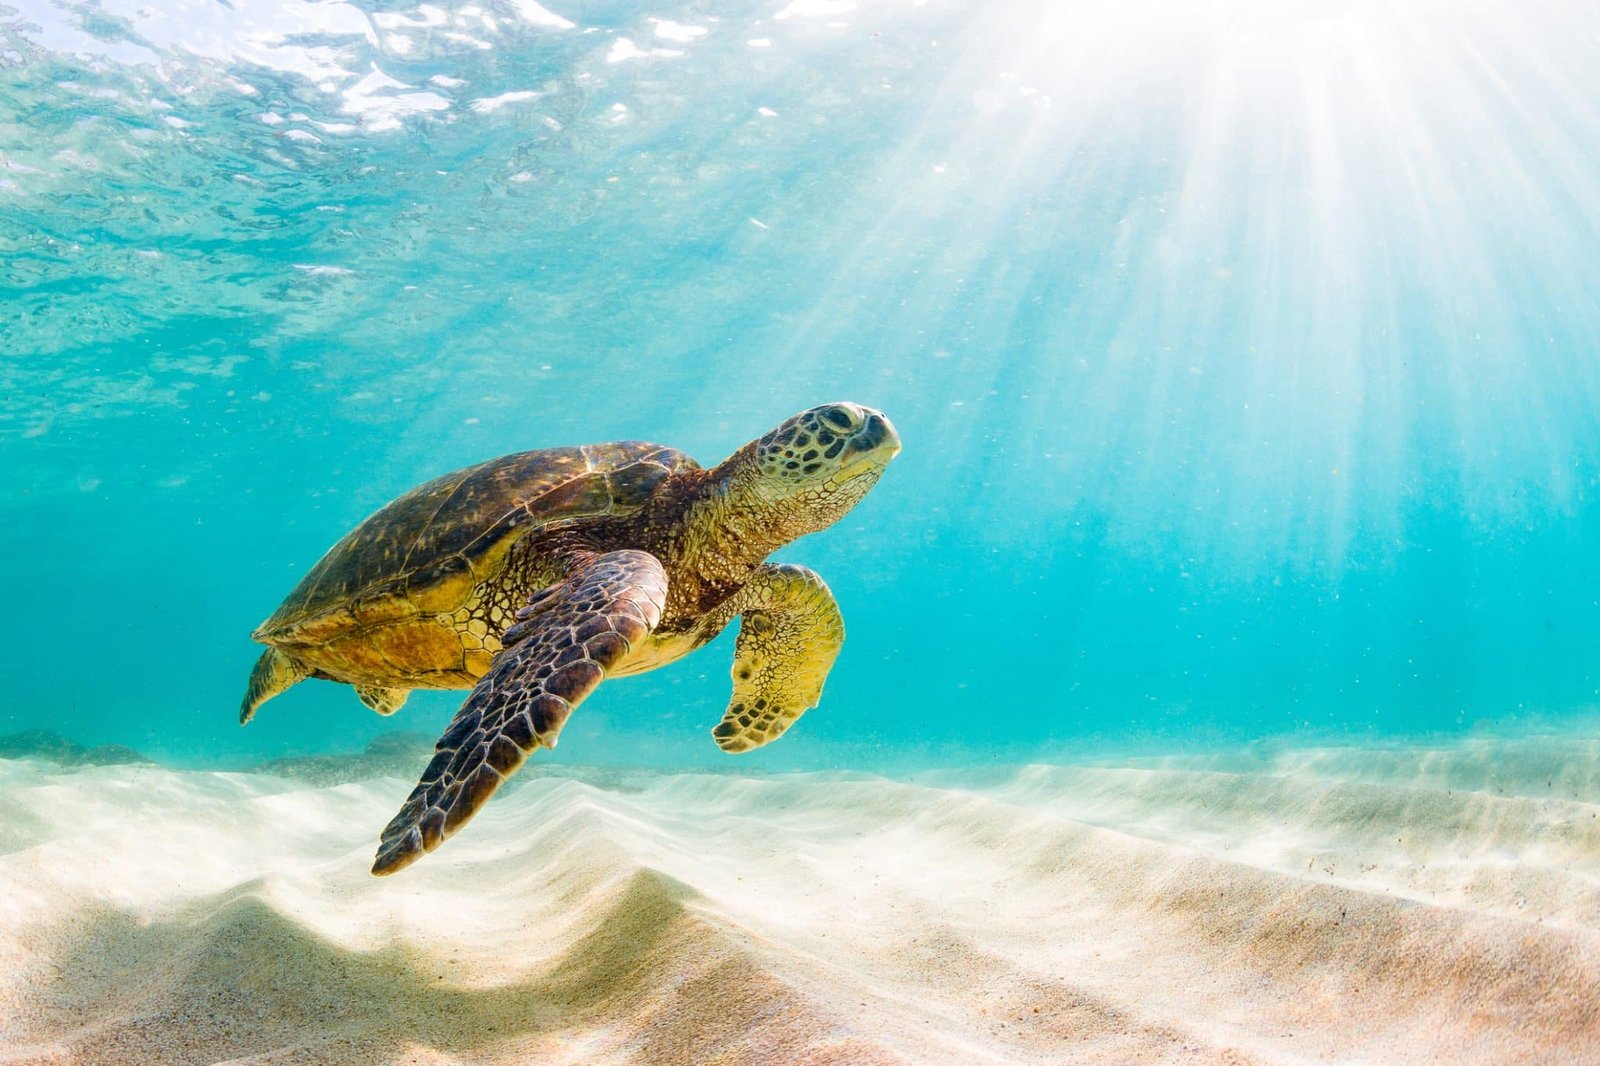 Green Sea Turtle Basking in the warm waters